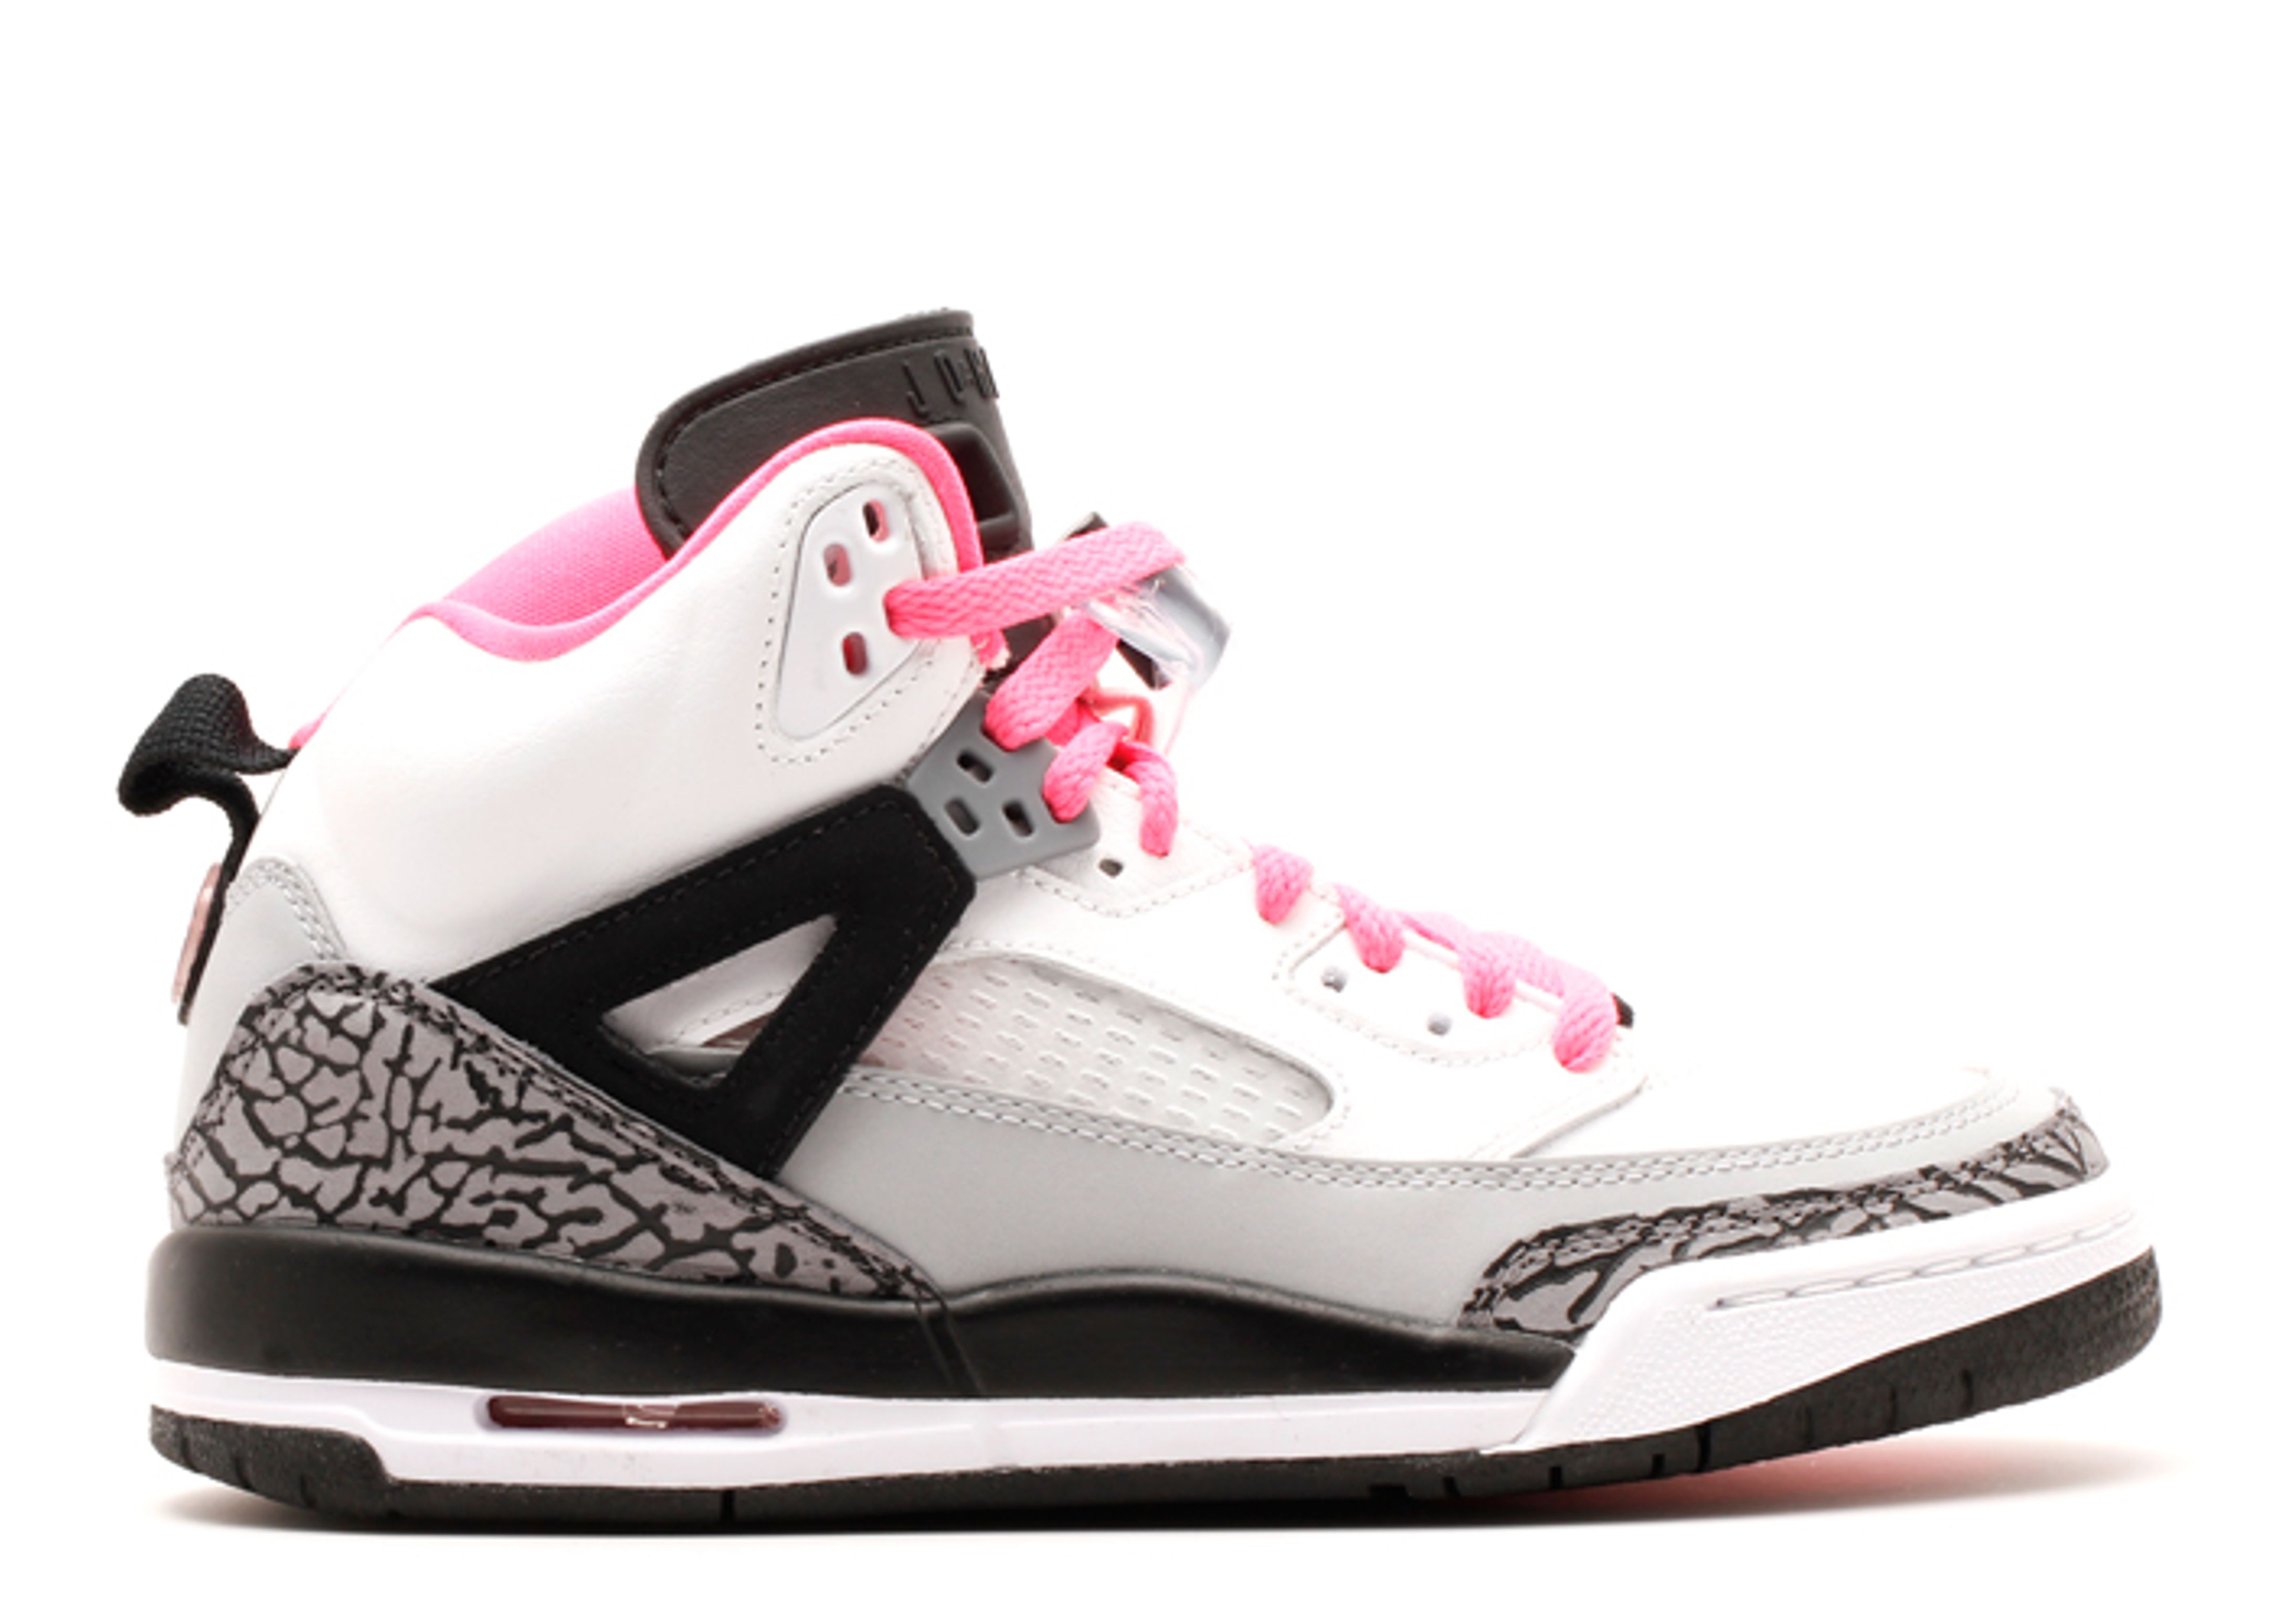 Jordan Spizike GG - Air Jordan 535712 109 - white/hyper pink-black-cl grey | Flight